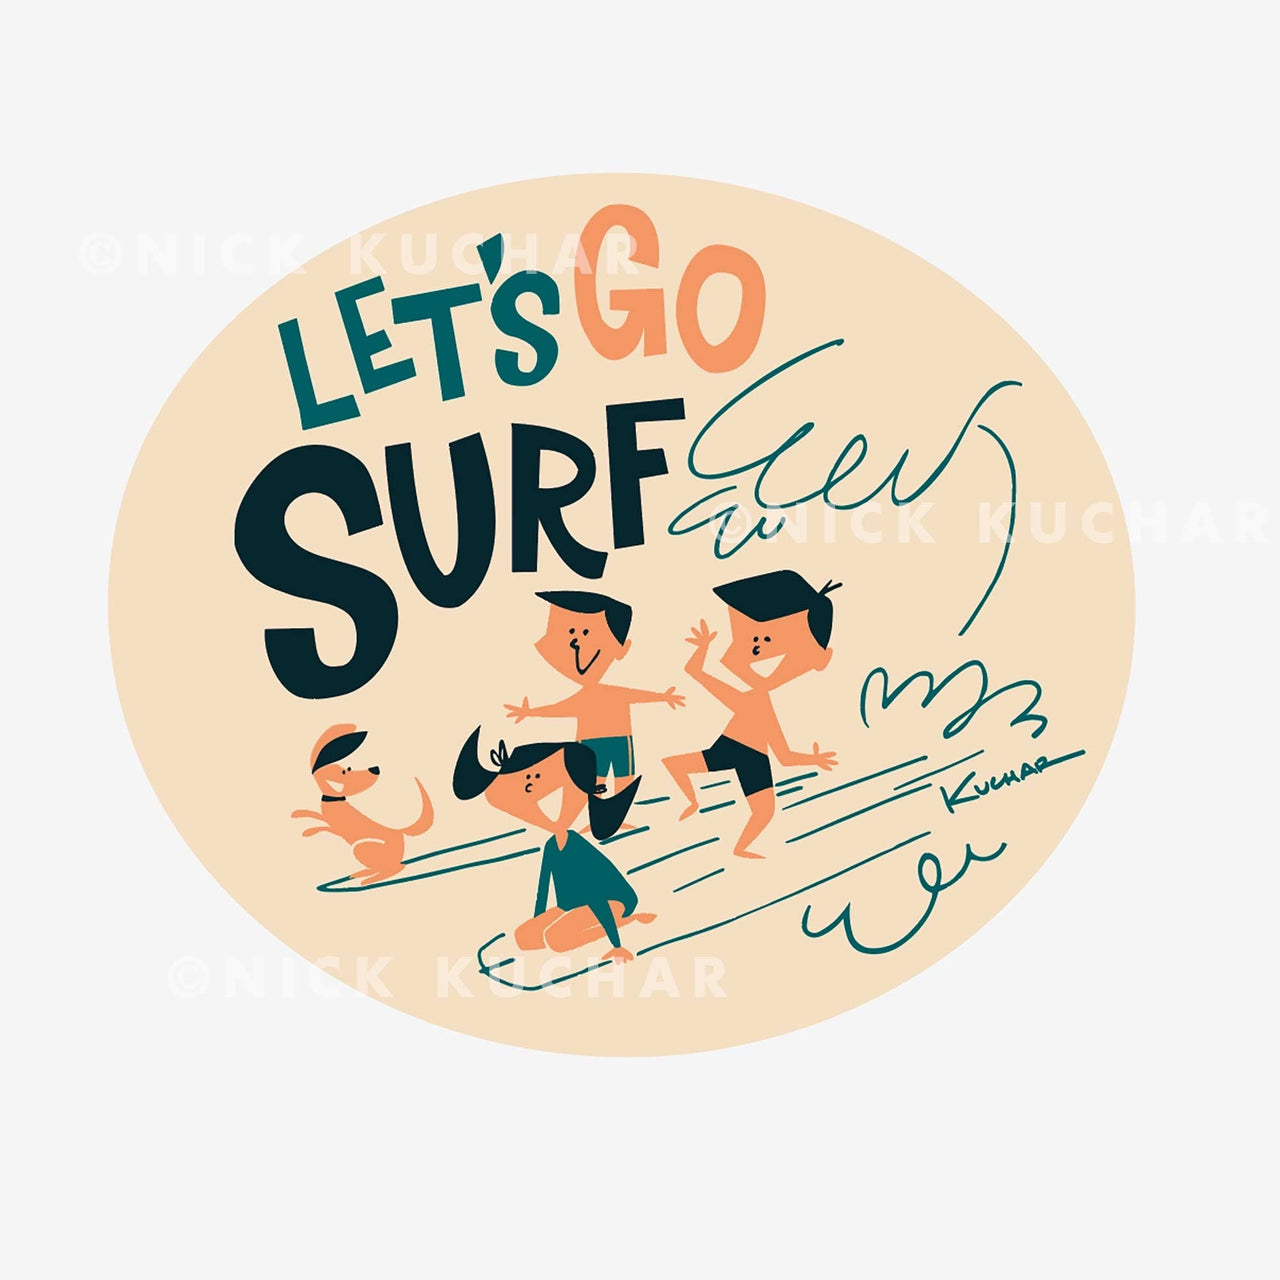 Let's go surf Hawaii sticker by Nick Kuchar